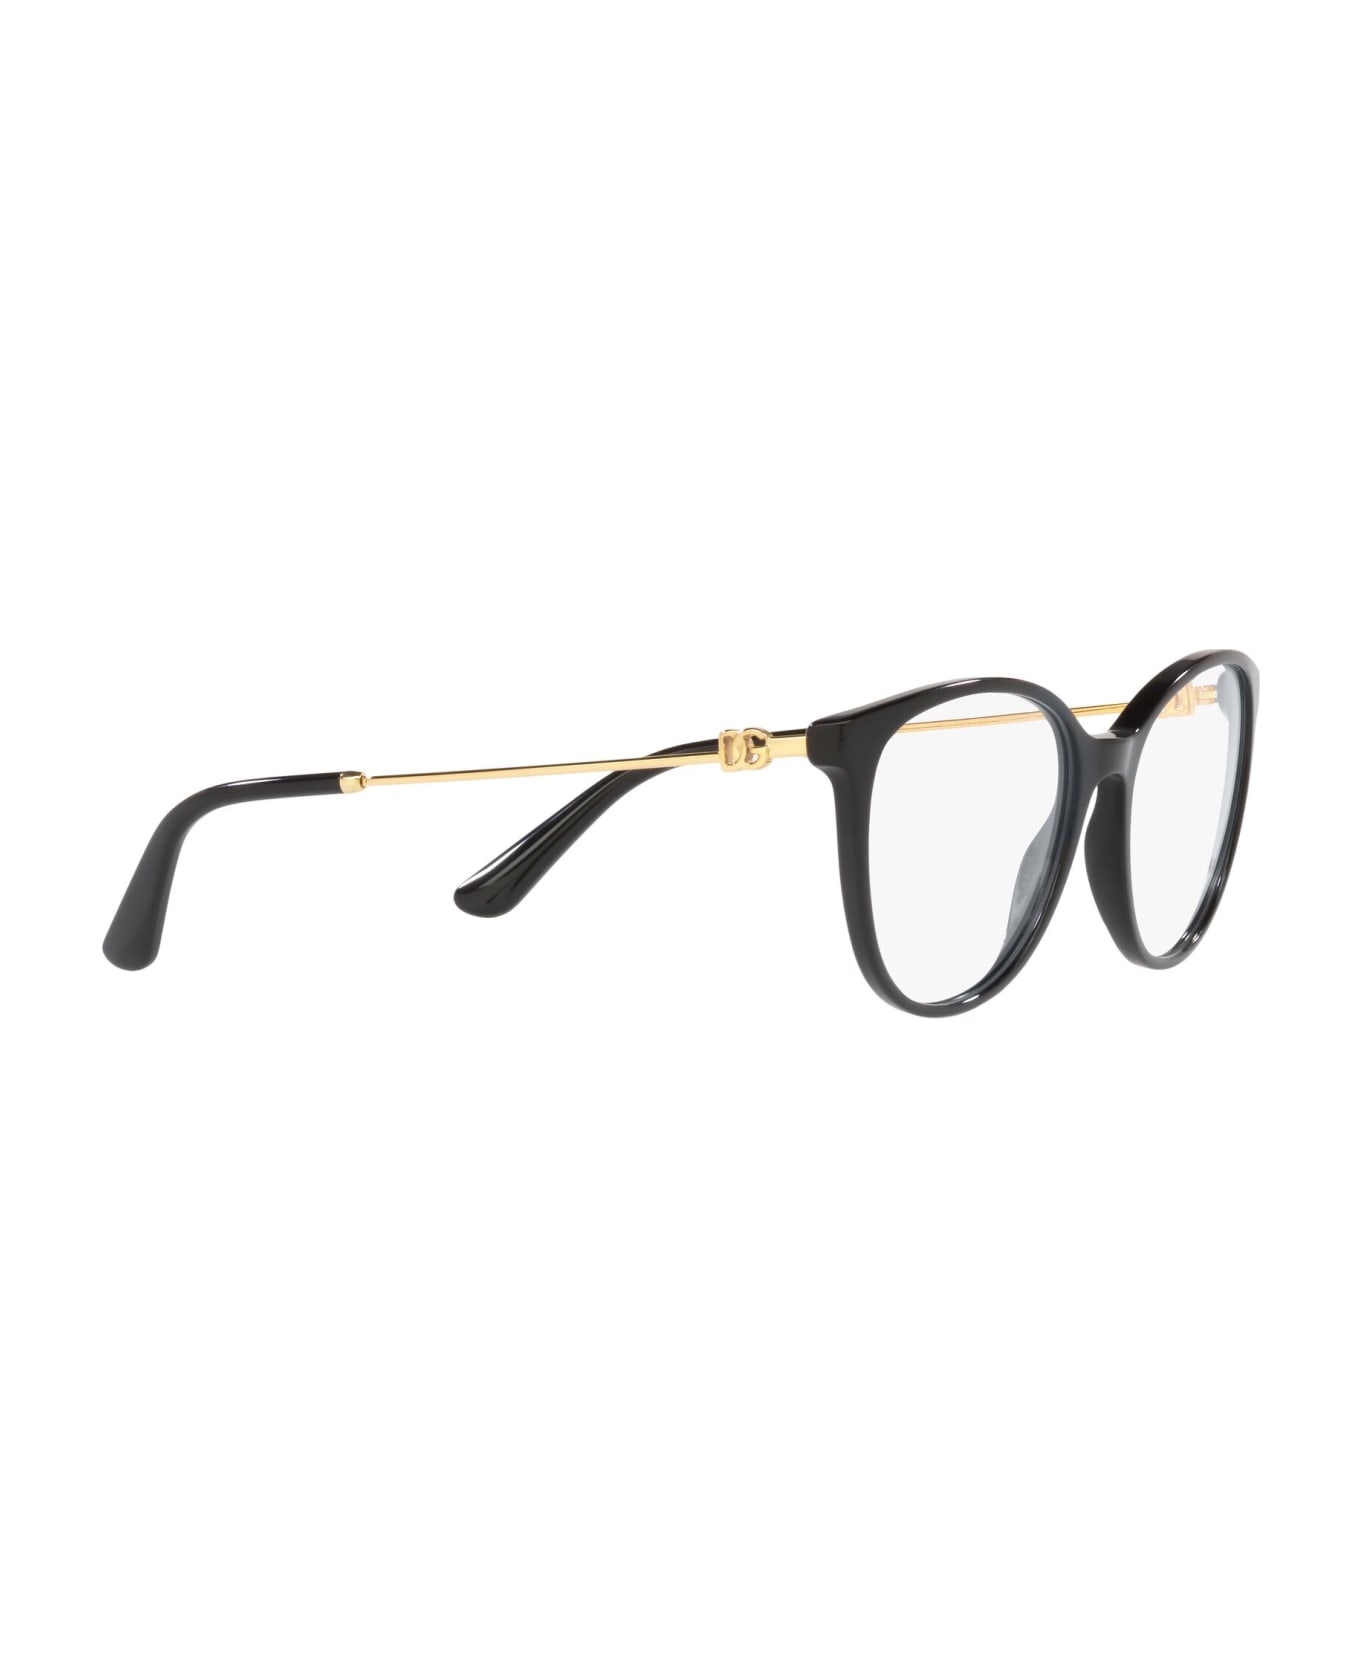 Dolce ANIMAL & Gabbana Eyewear Glasses - Nero